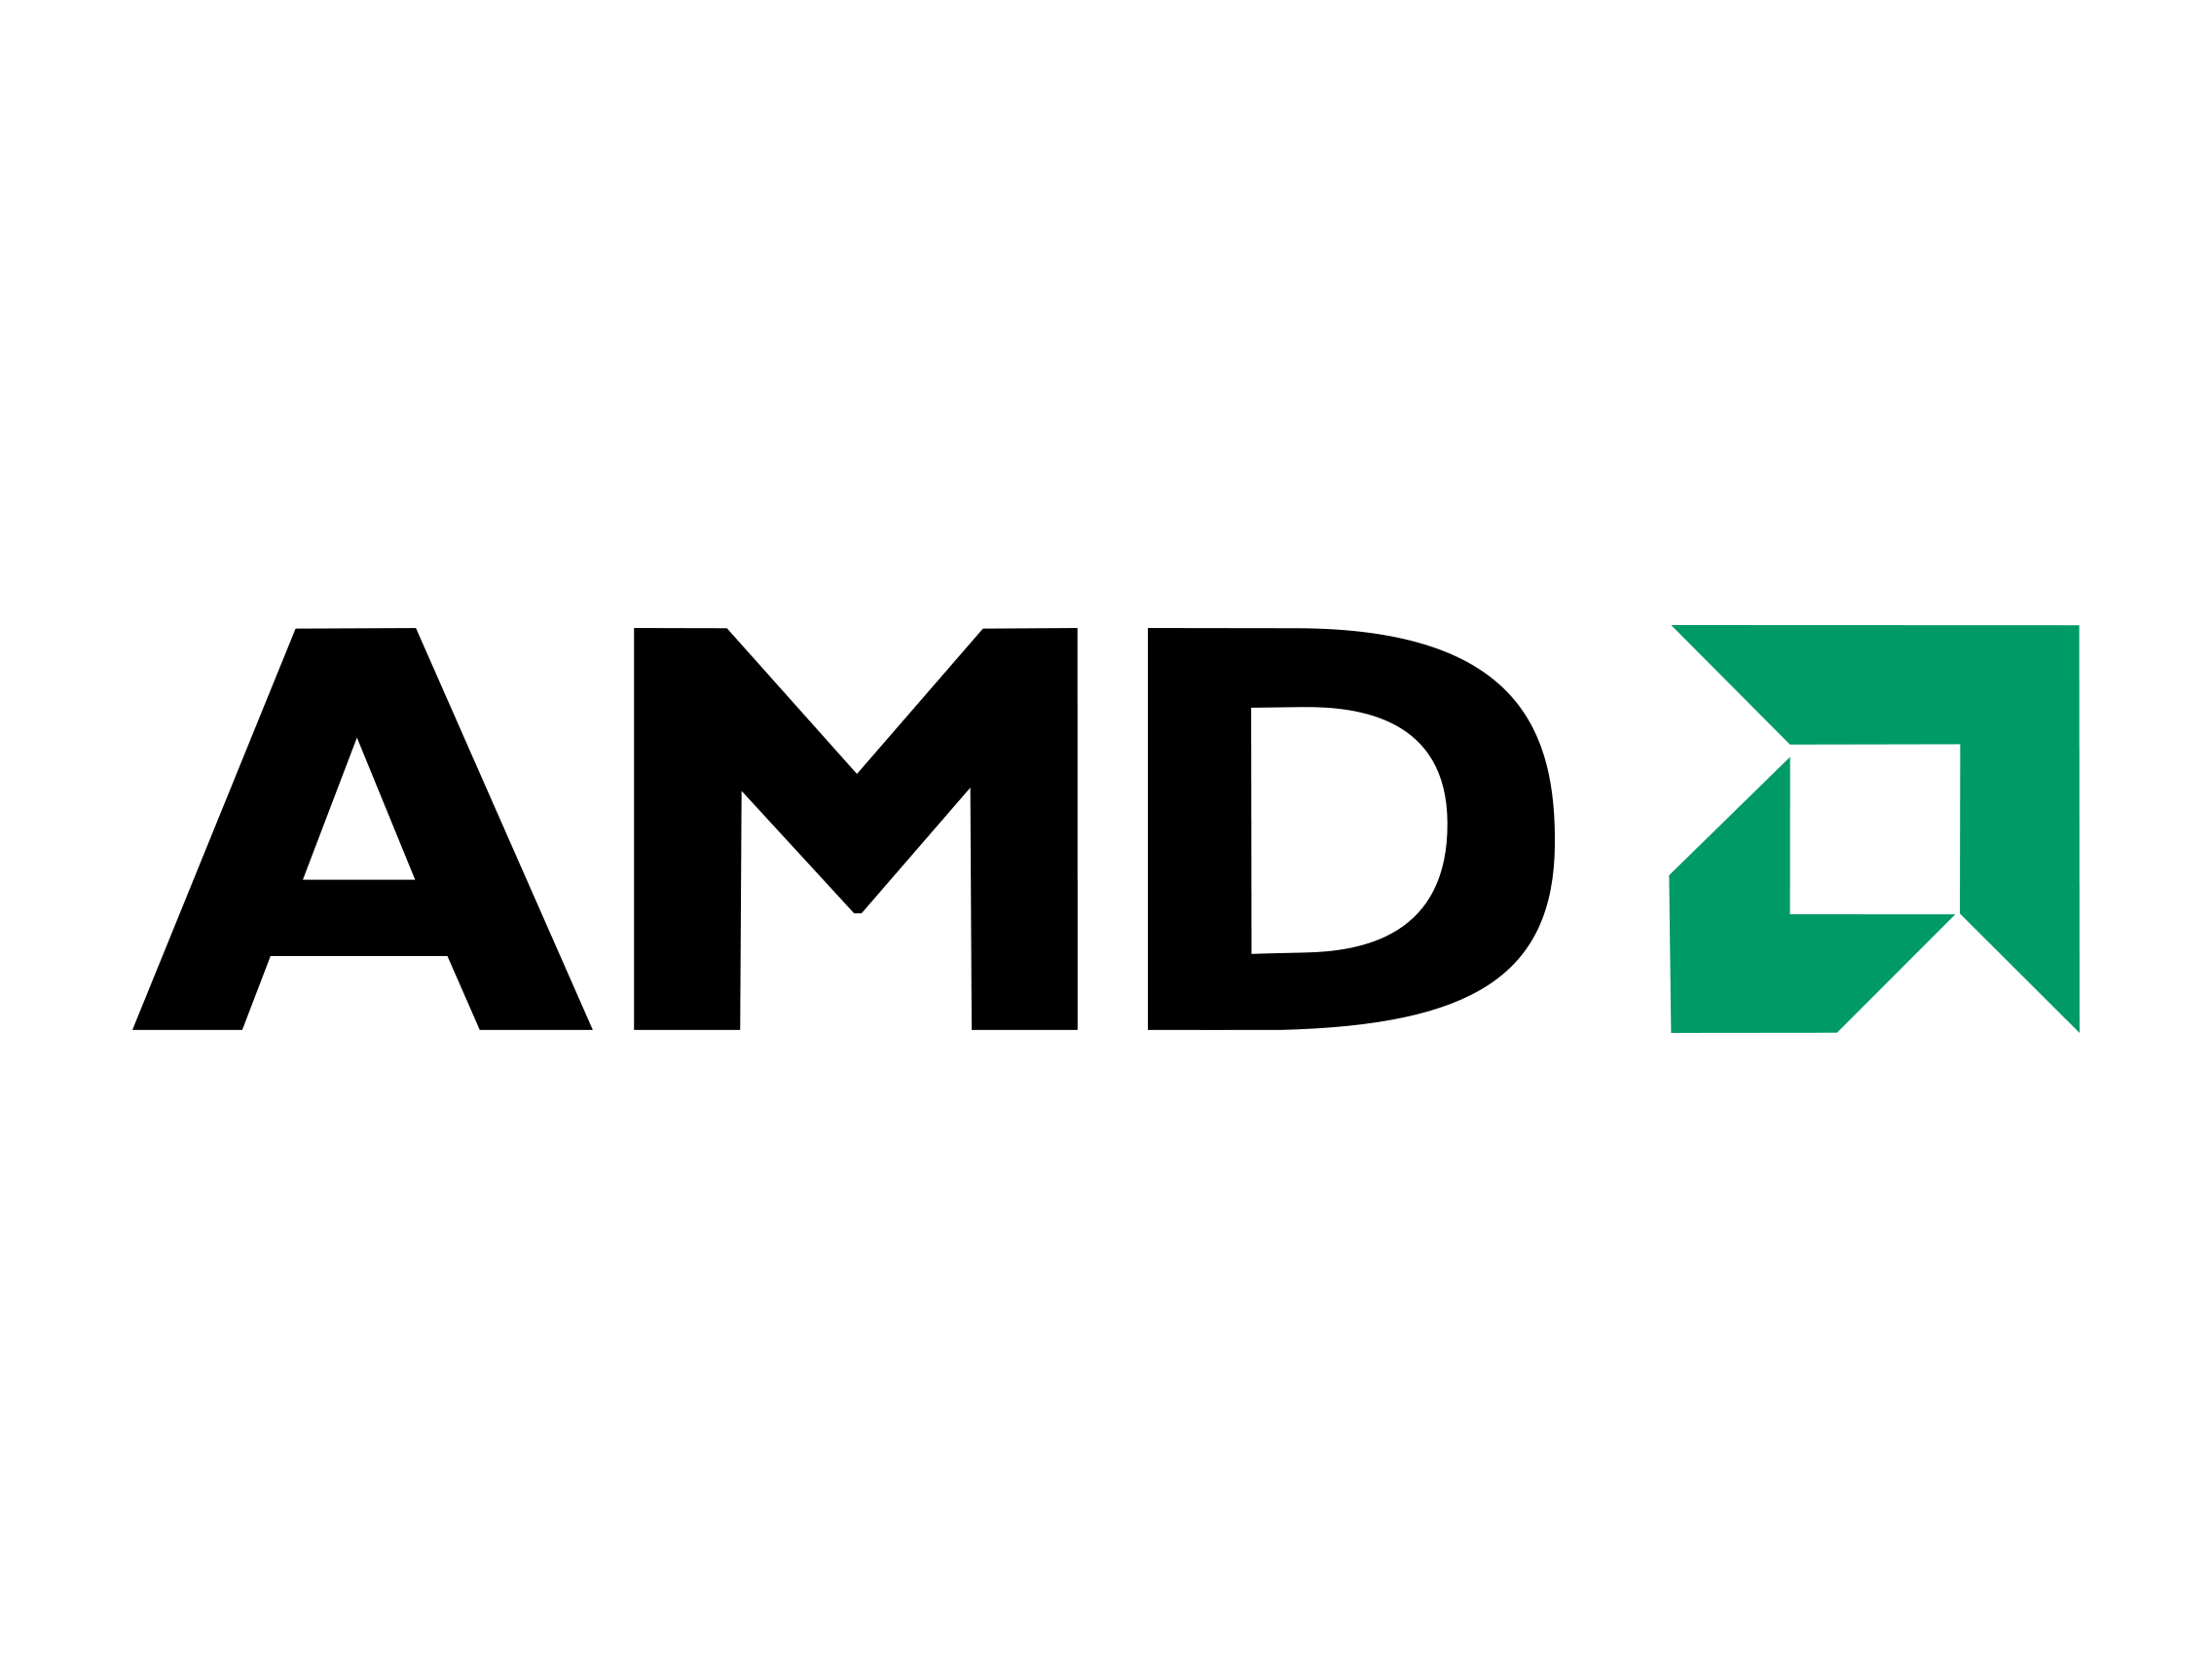 Old AMD Logo - AMD logo